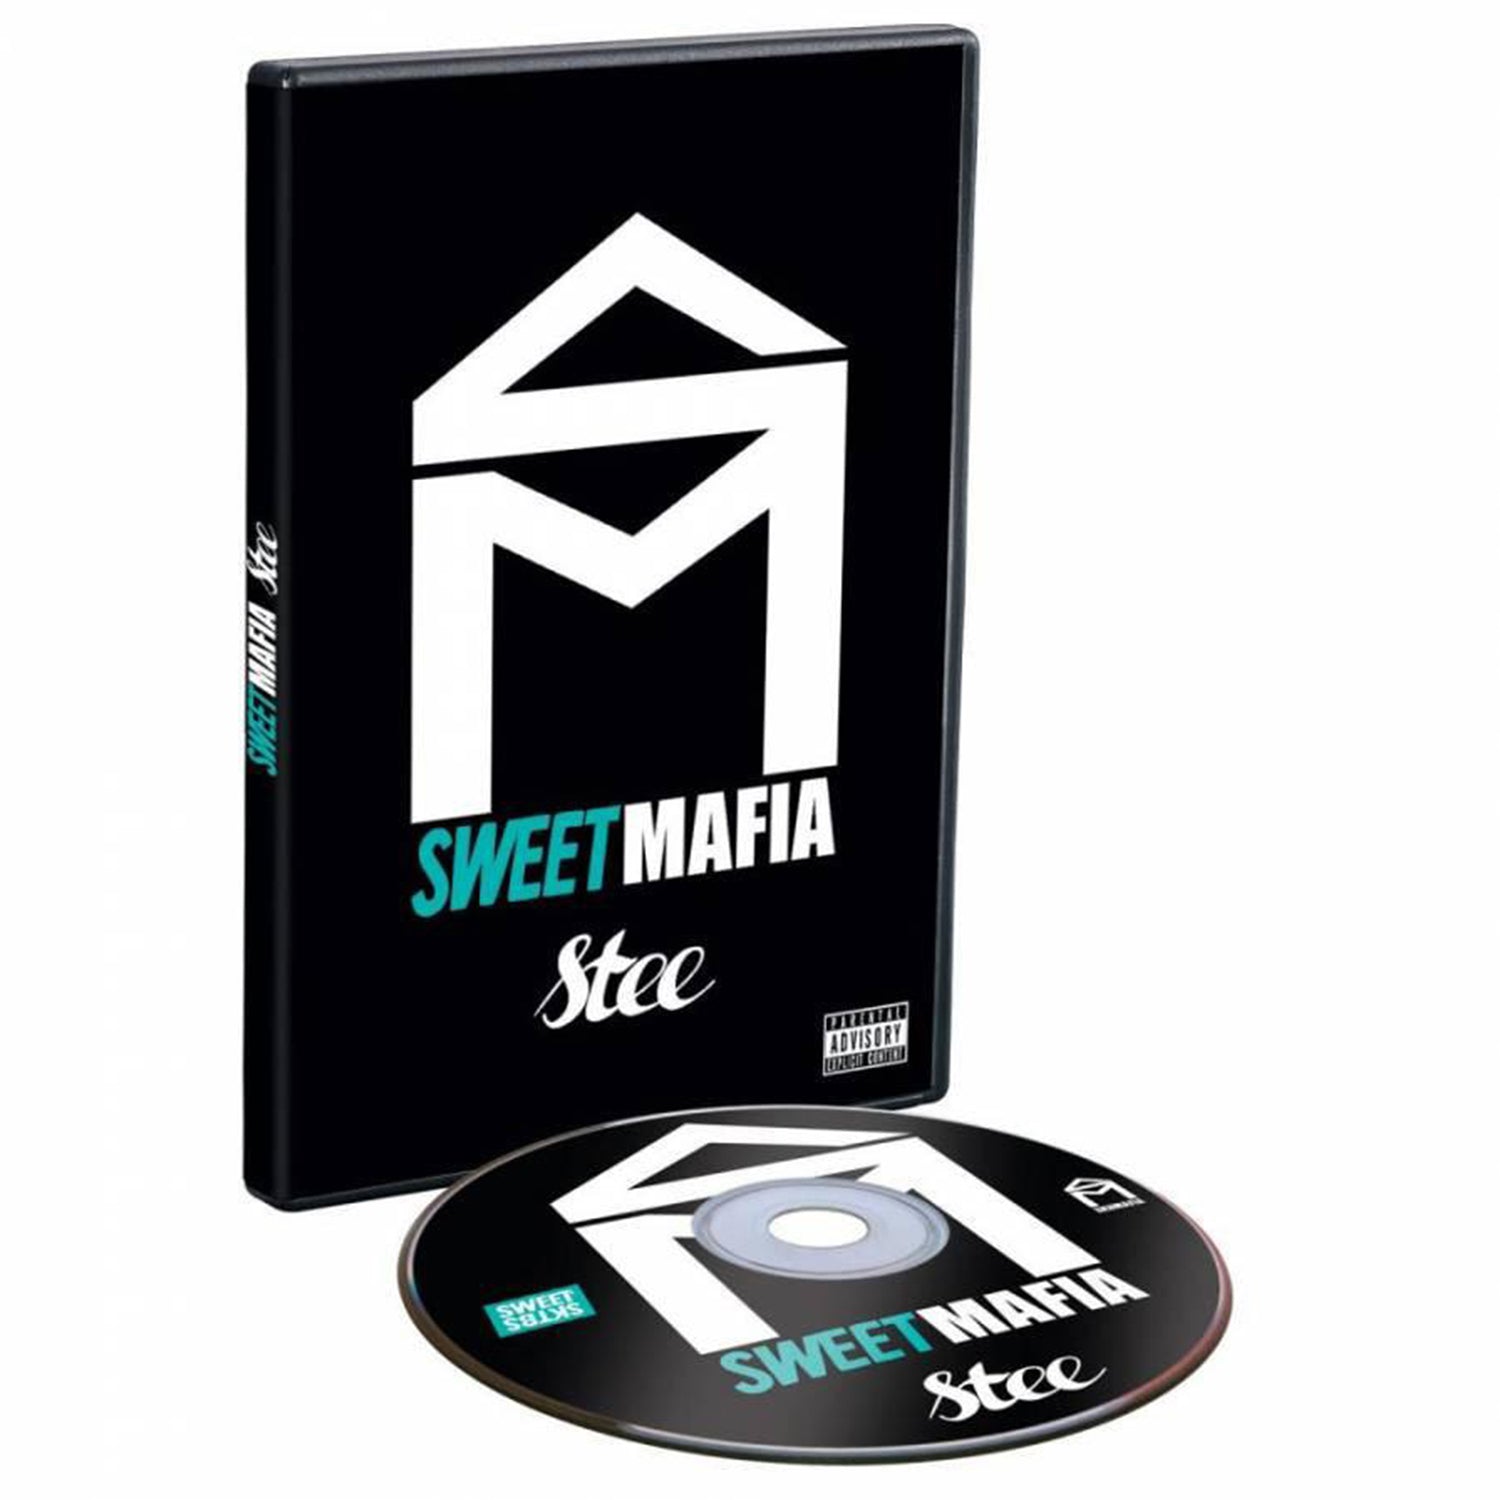 Sweet Mafia Stee video